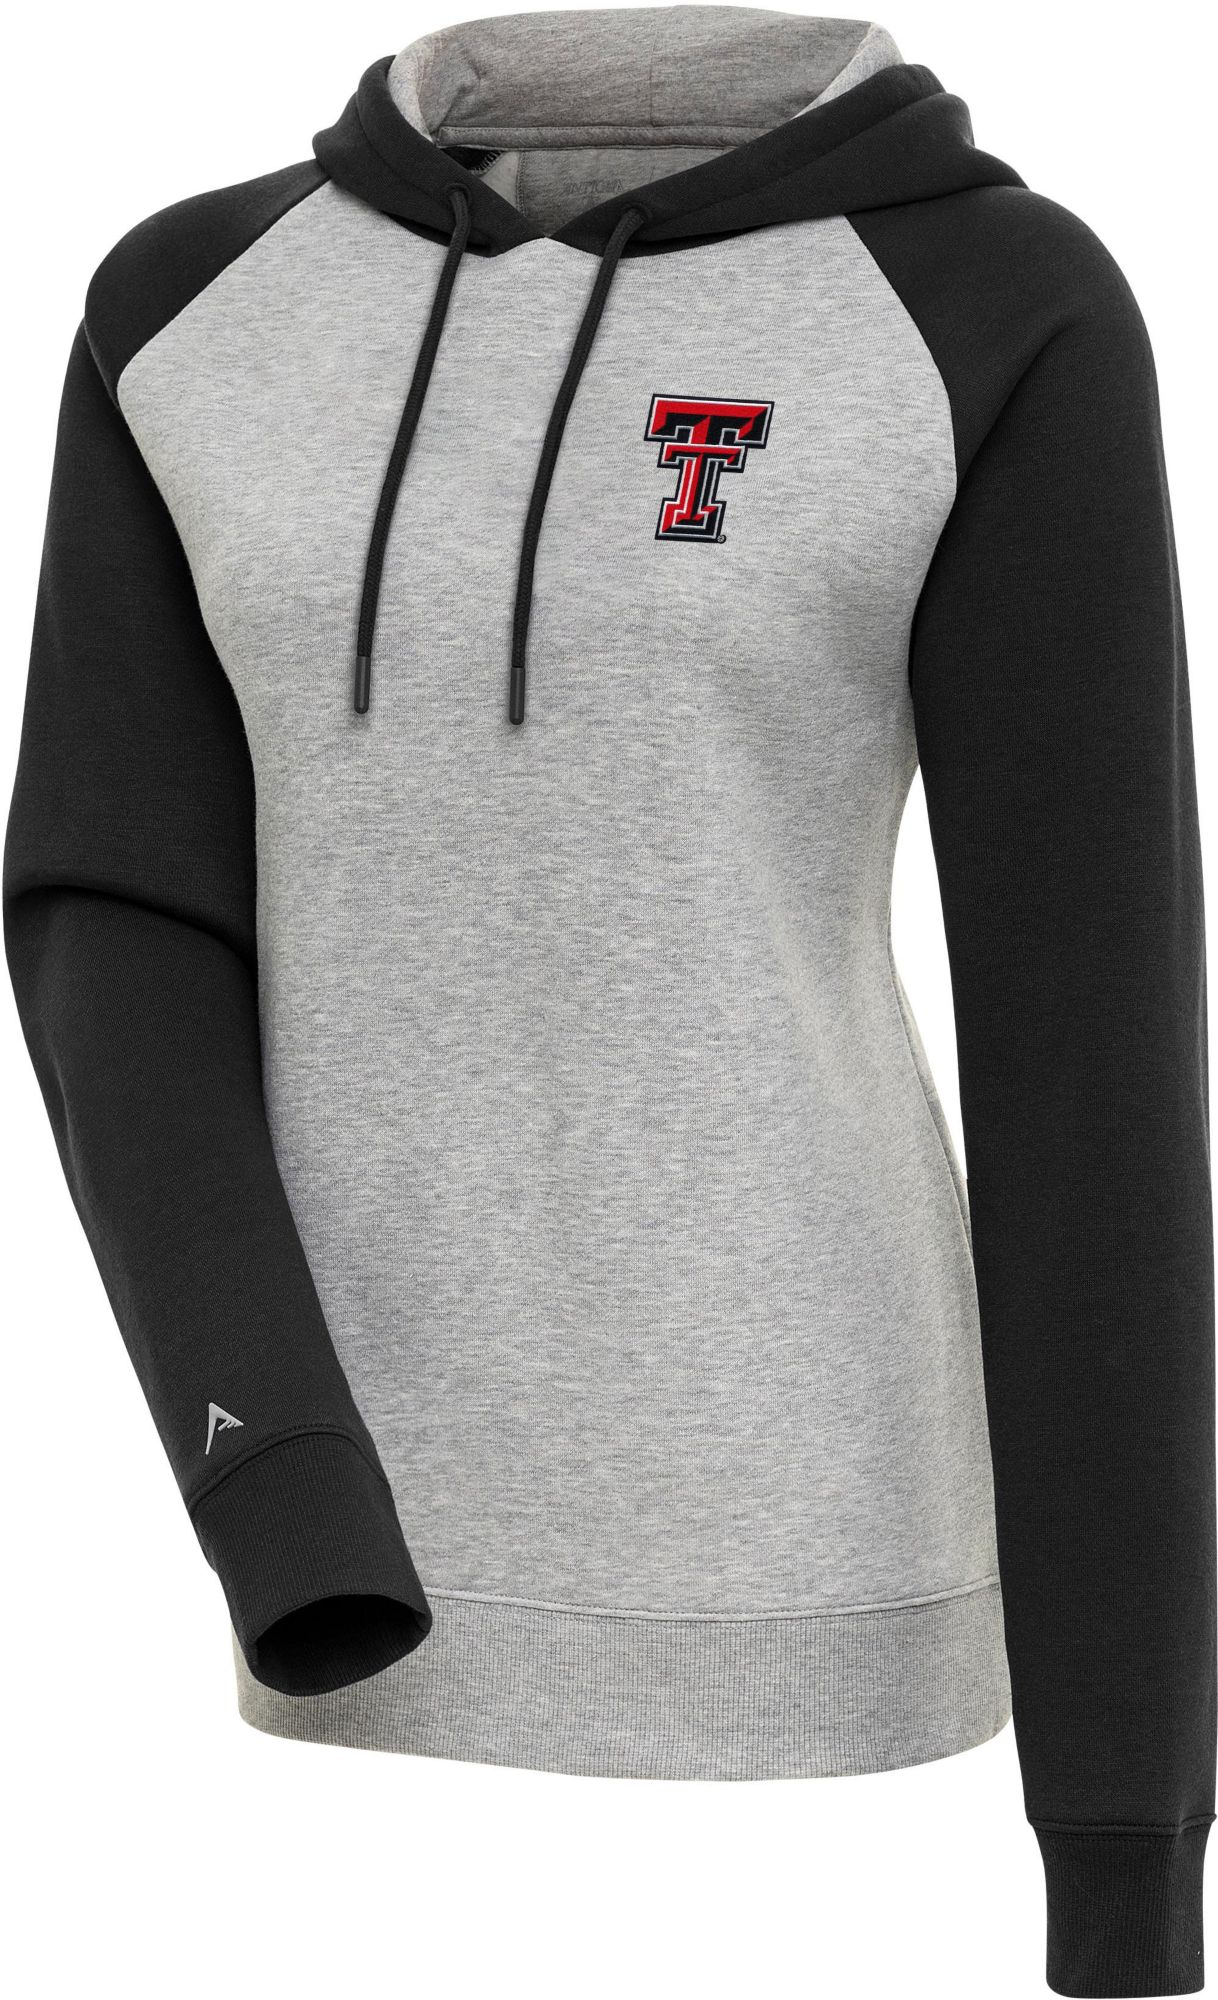 Antigua Women's Texas Tech Red Raiders Black Victory Colorblock Pullover Hoodie, XL, Gray